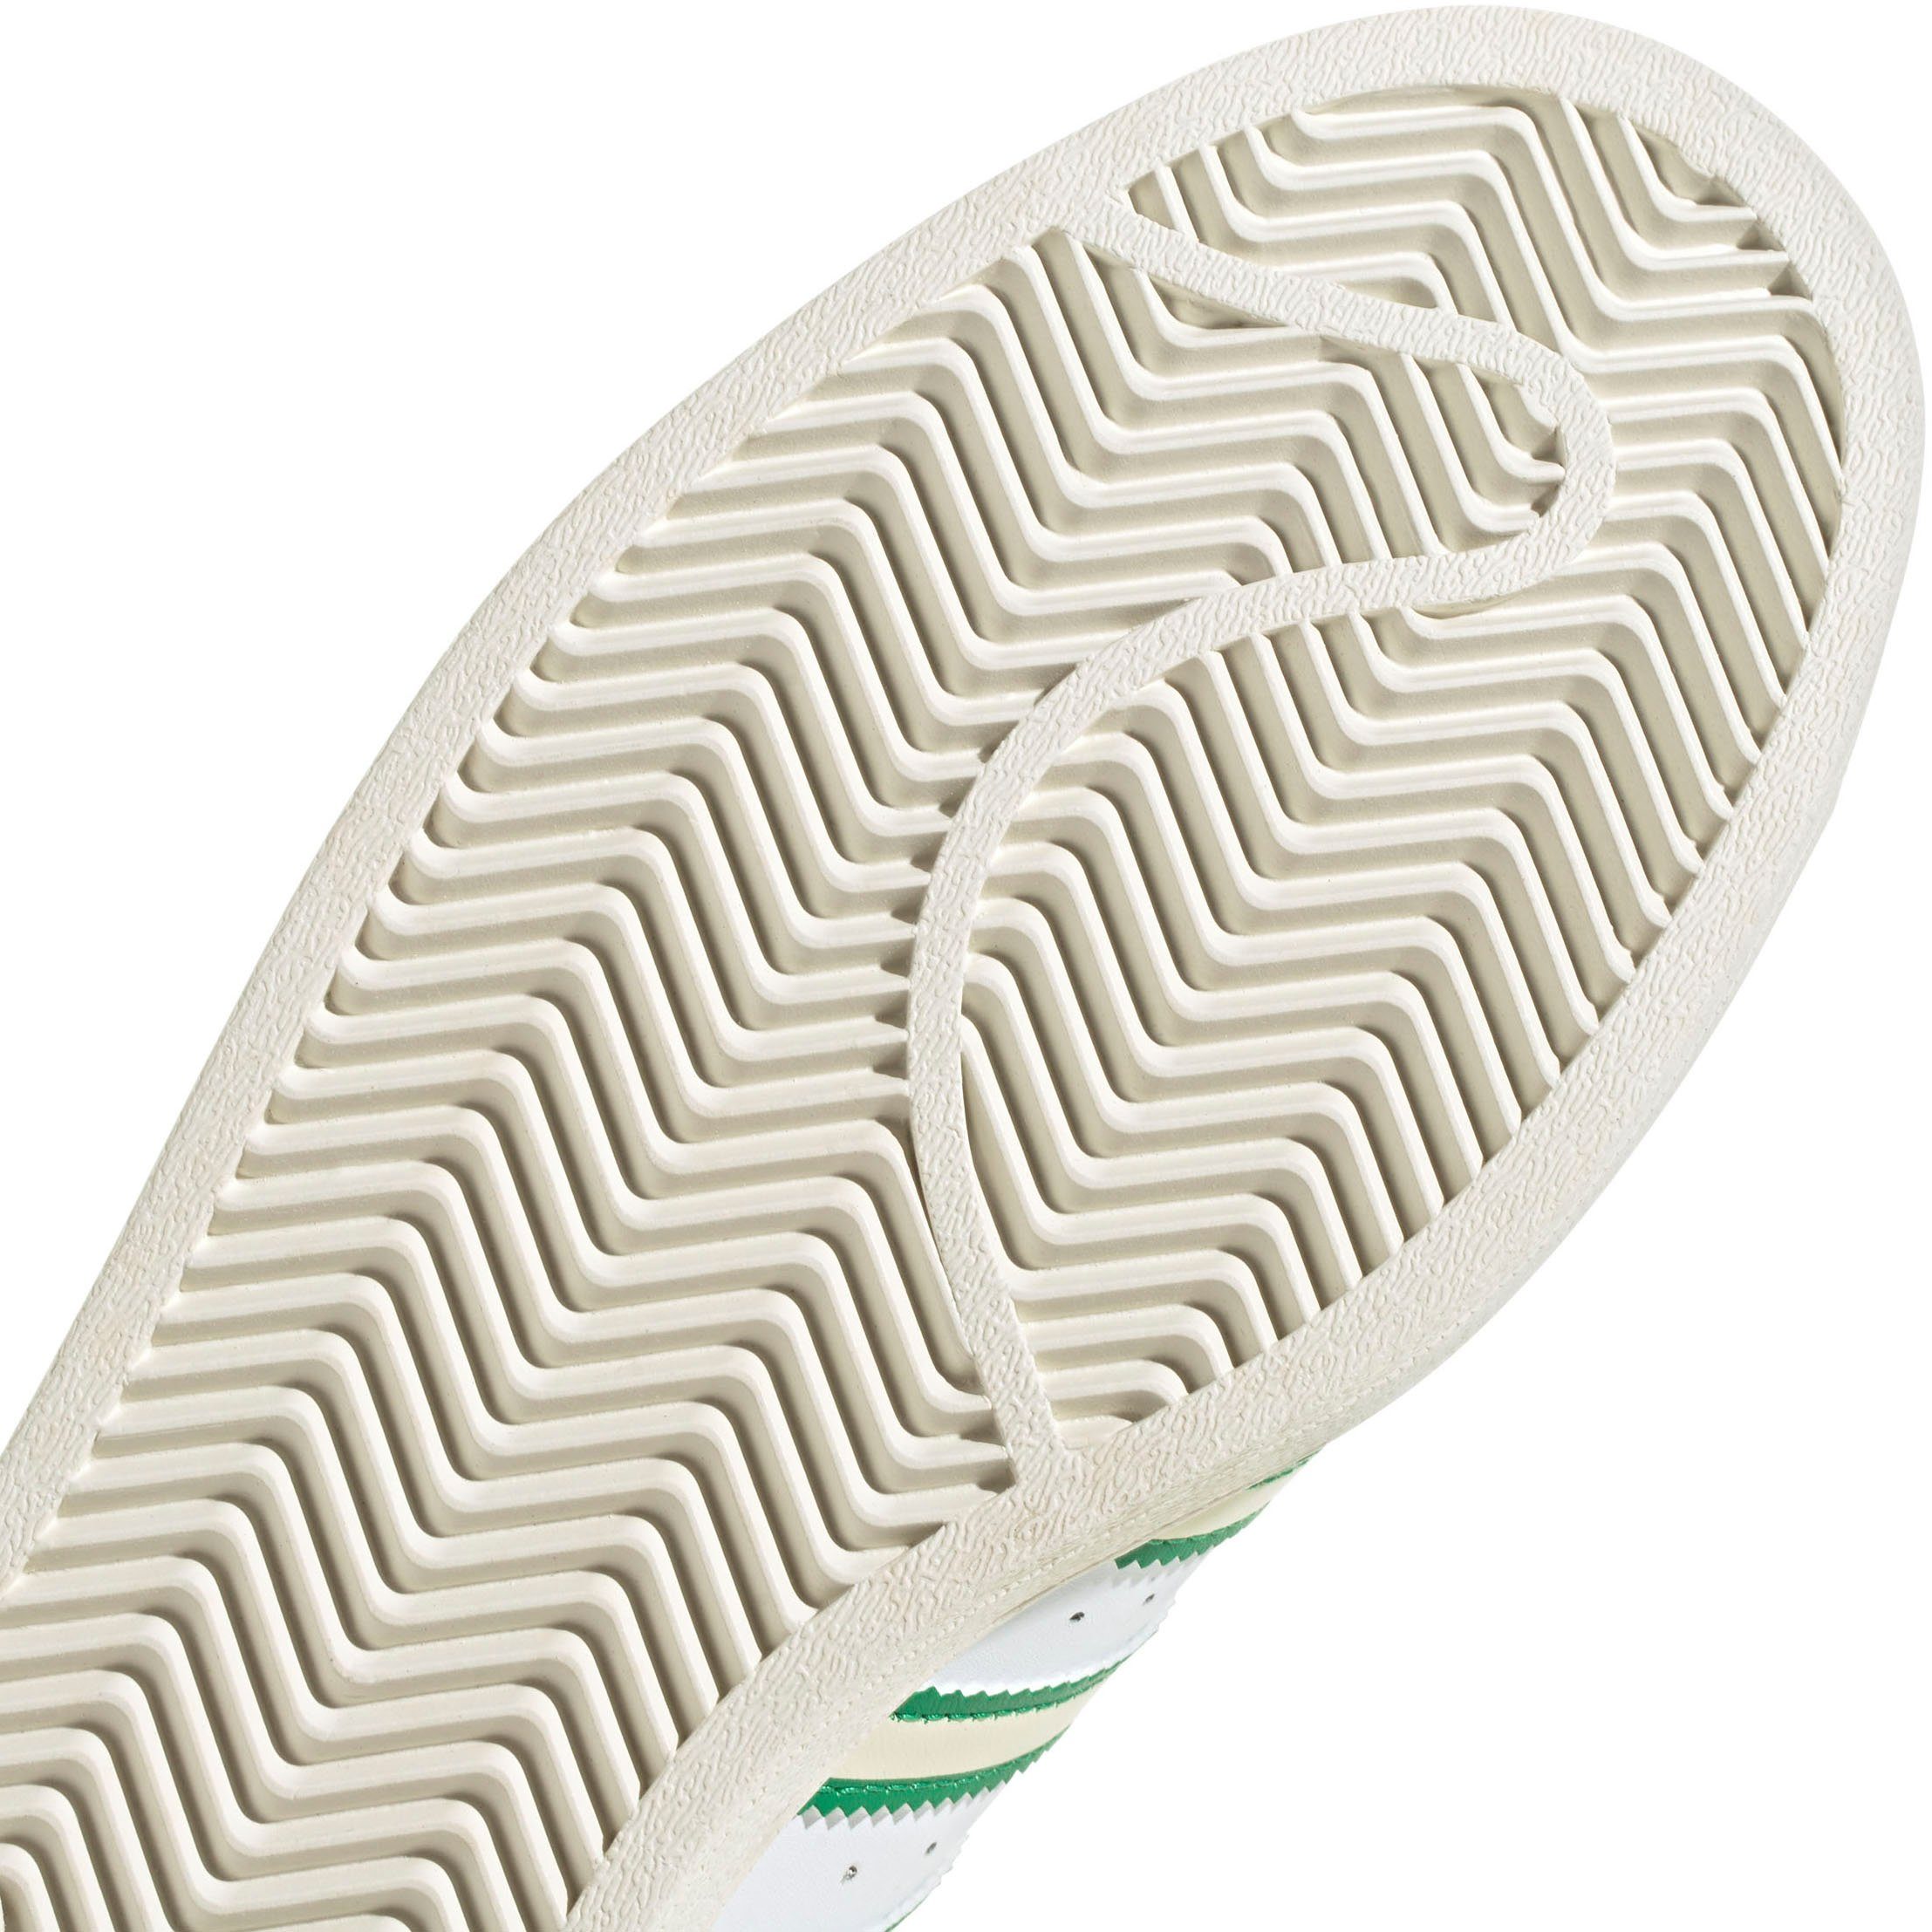 adidas Originals Sneaker SUPERSTAR weiß-grün